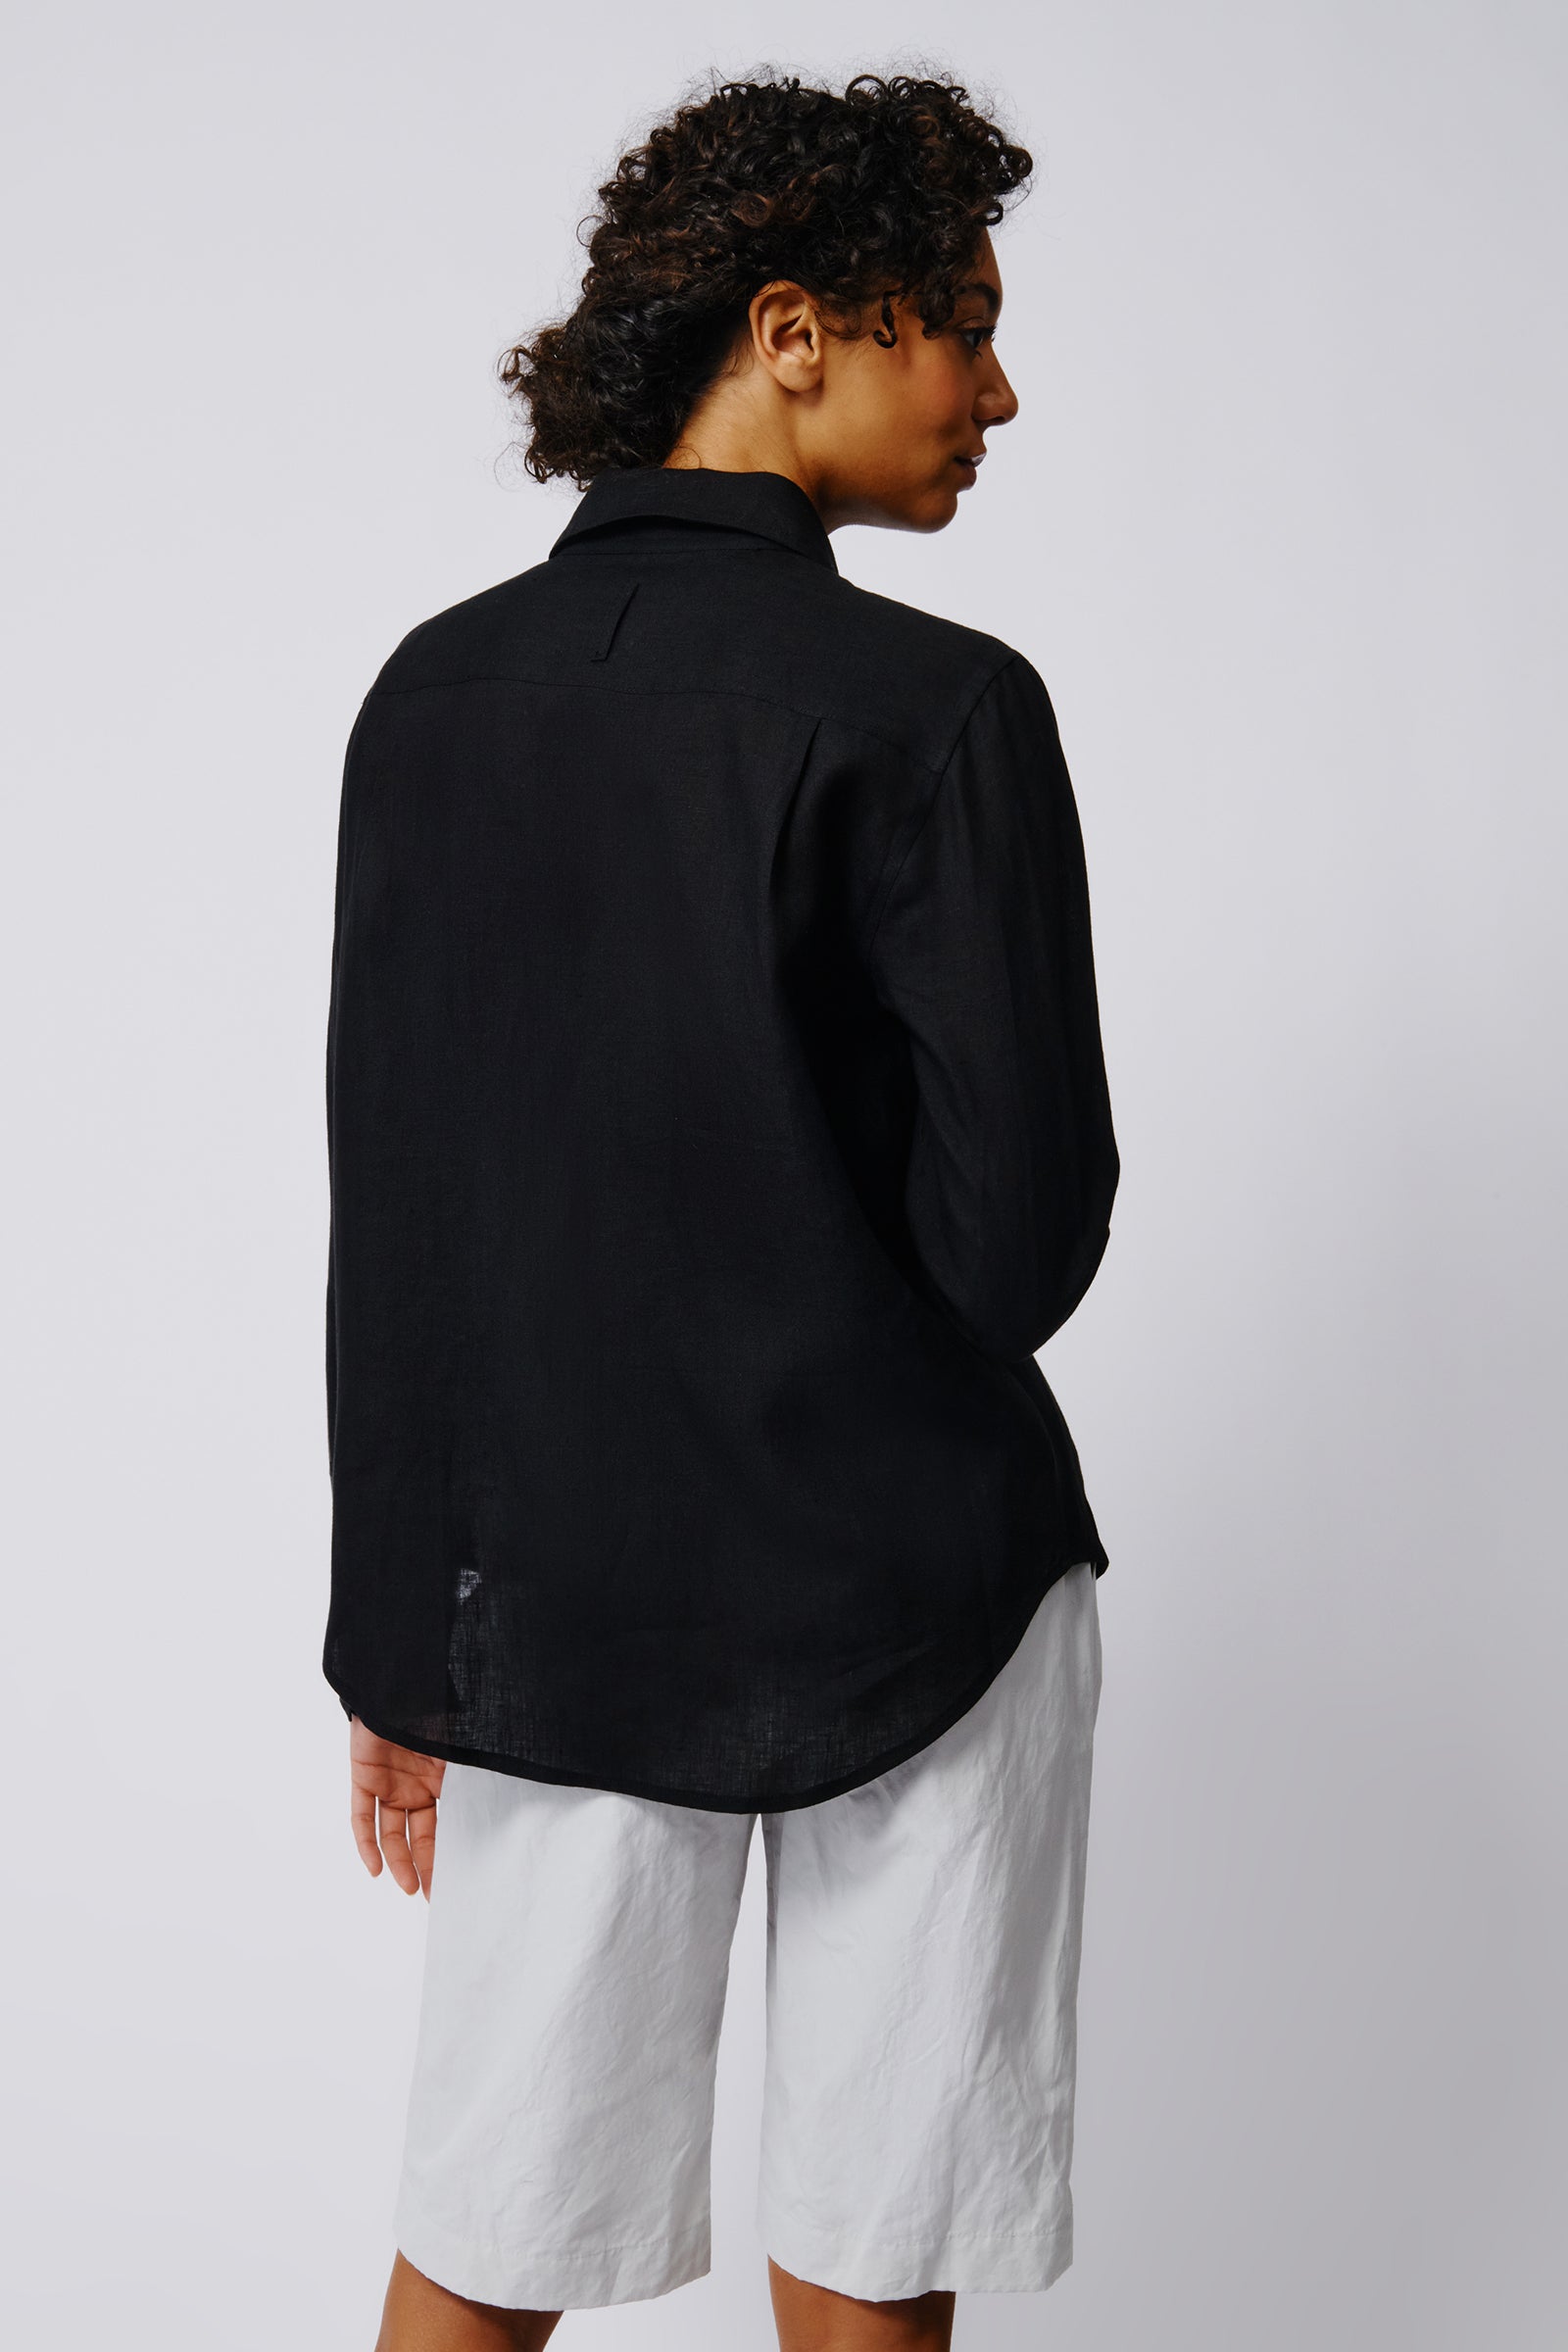 Kal Rieman Summer Shirt in Black on Model Back View Crop